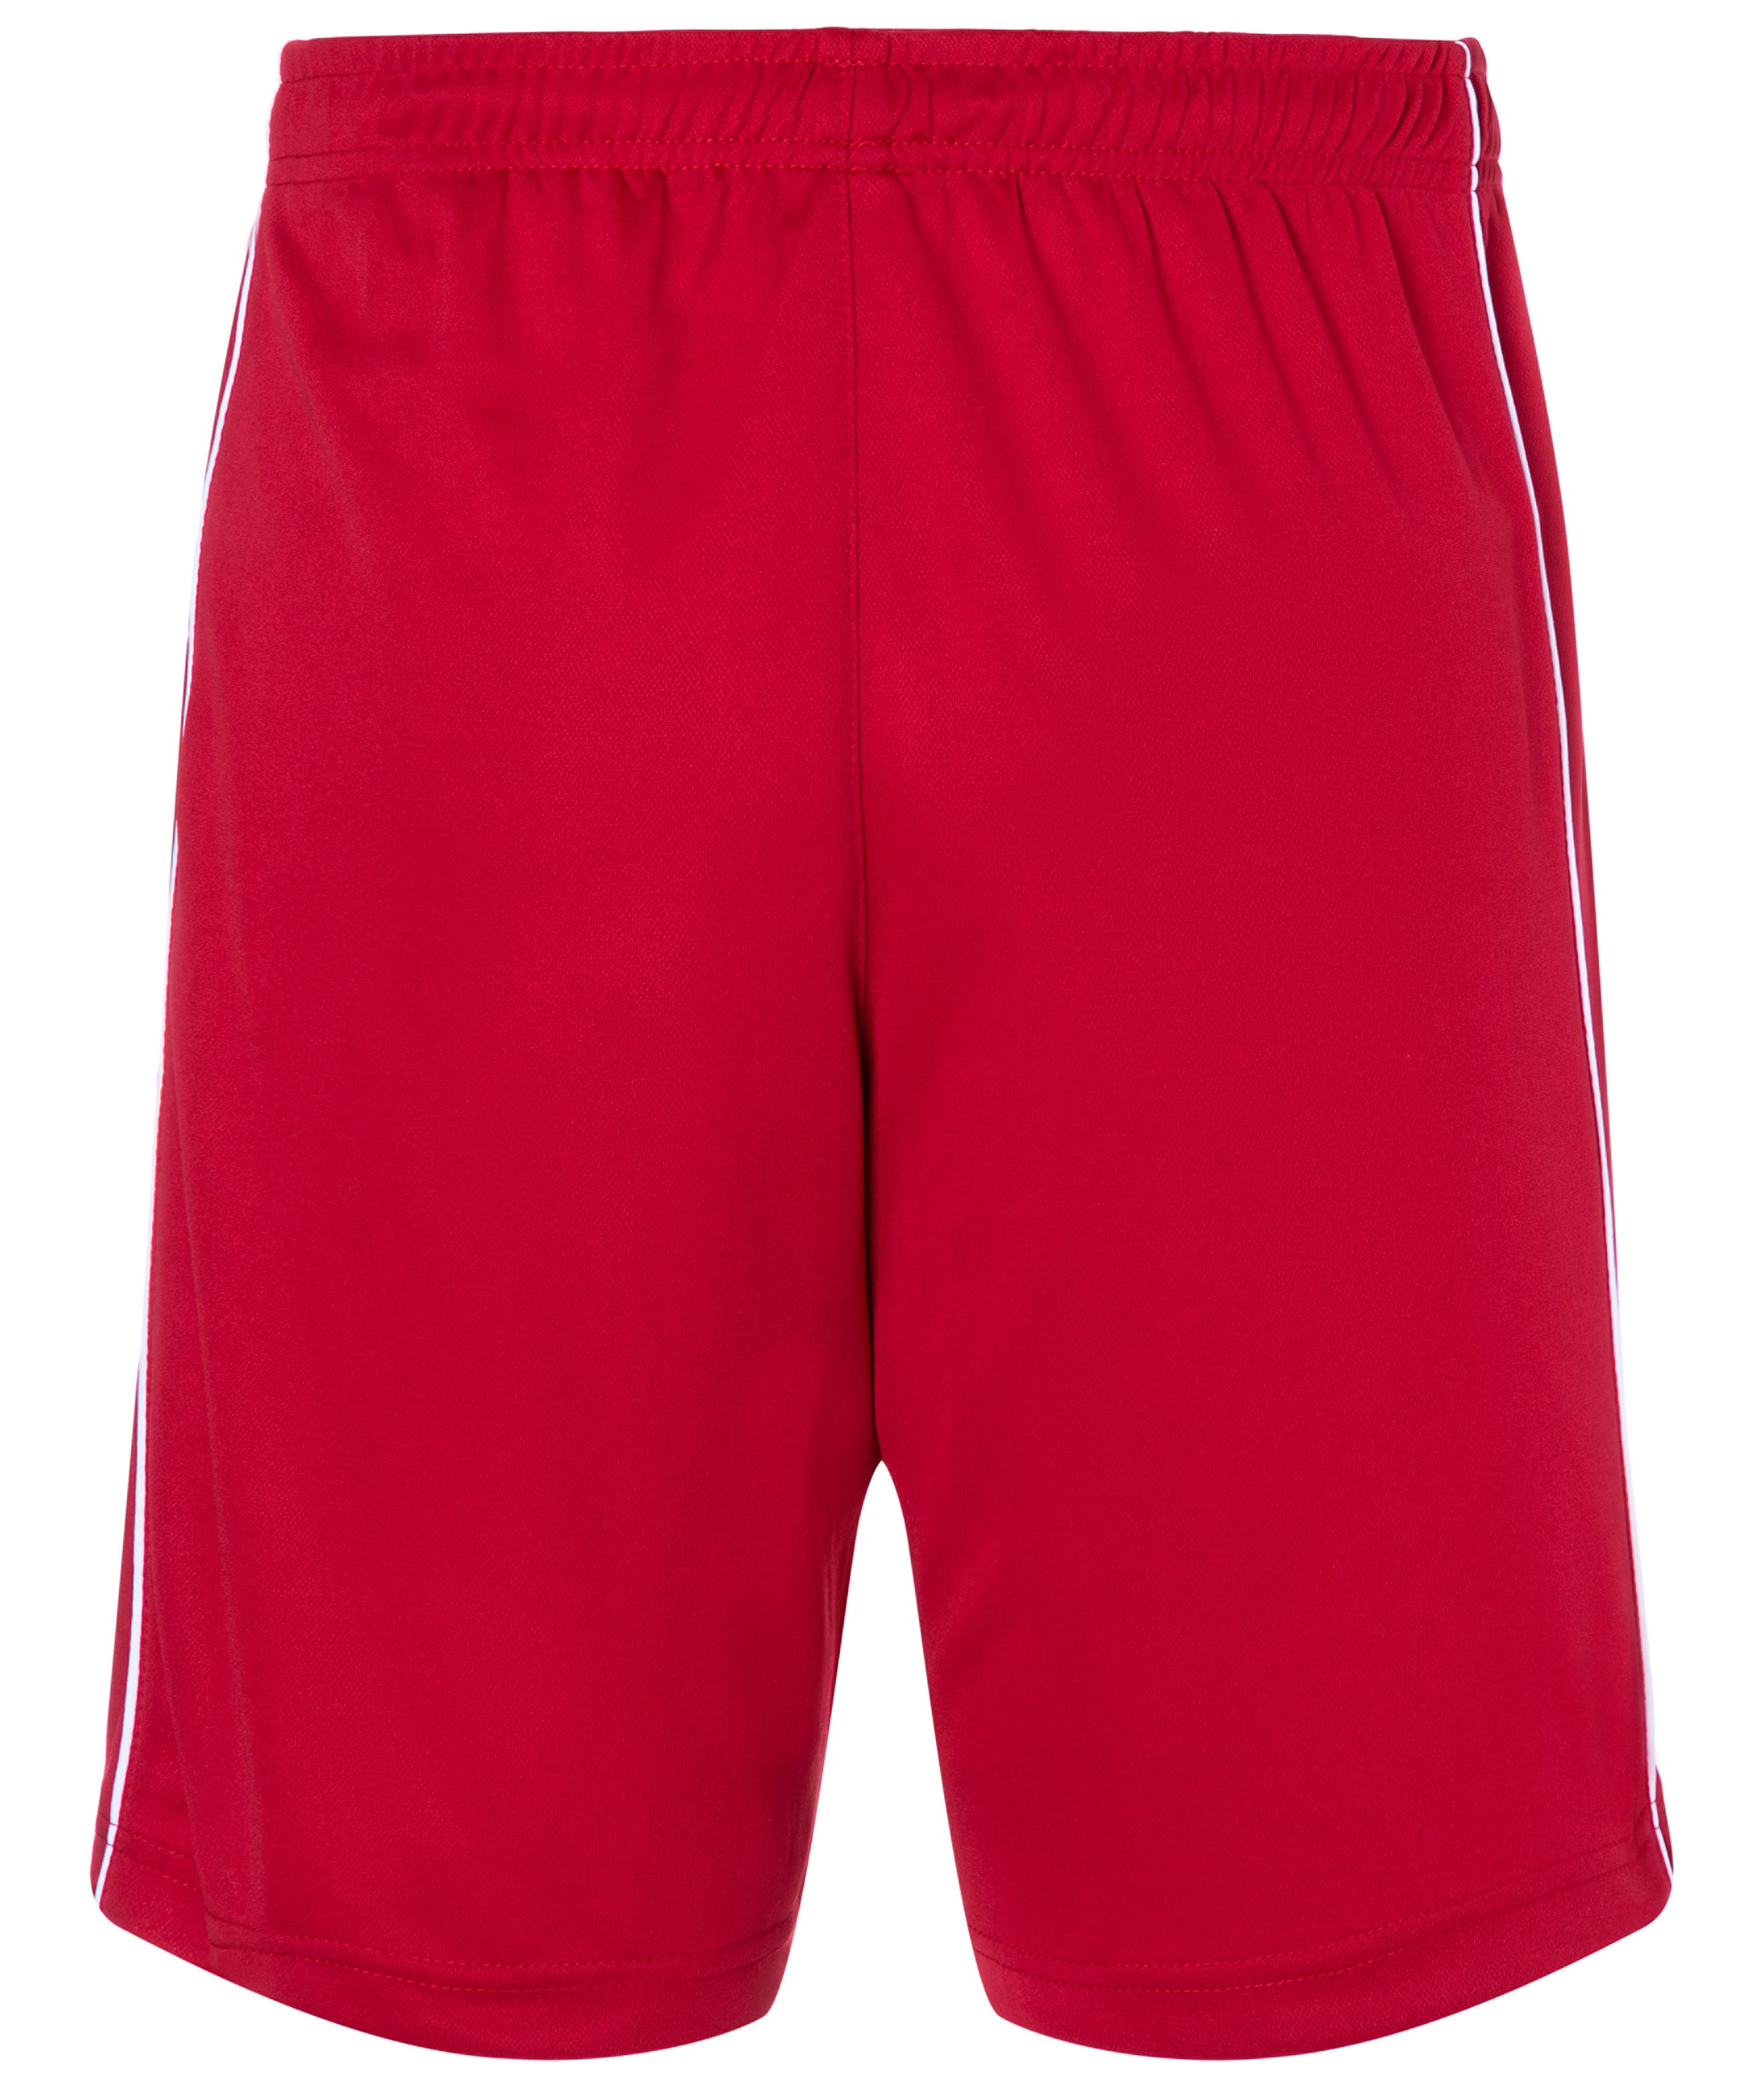 Unisex Basic Team Shorts Red/white-Daiber